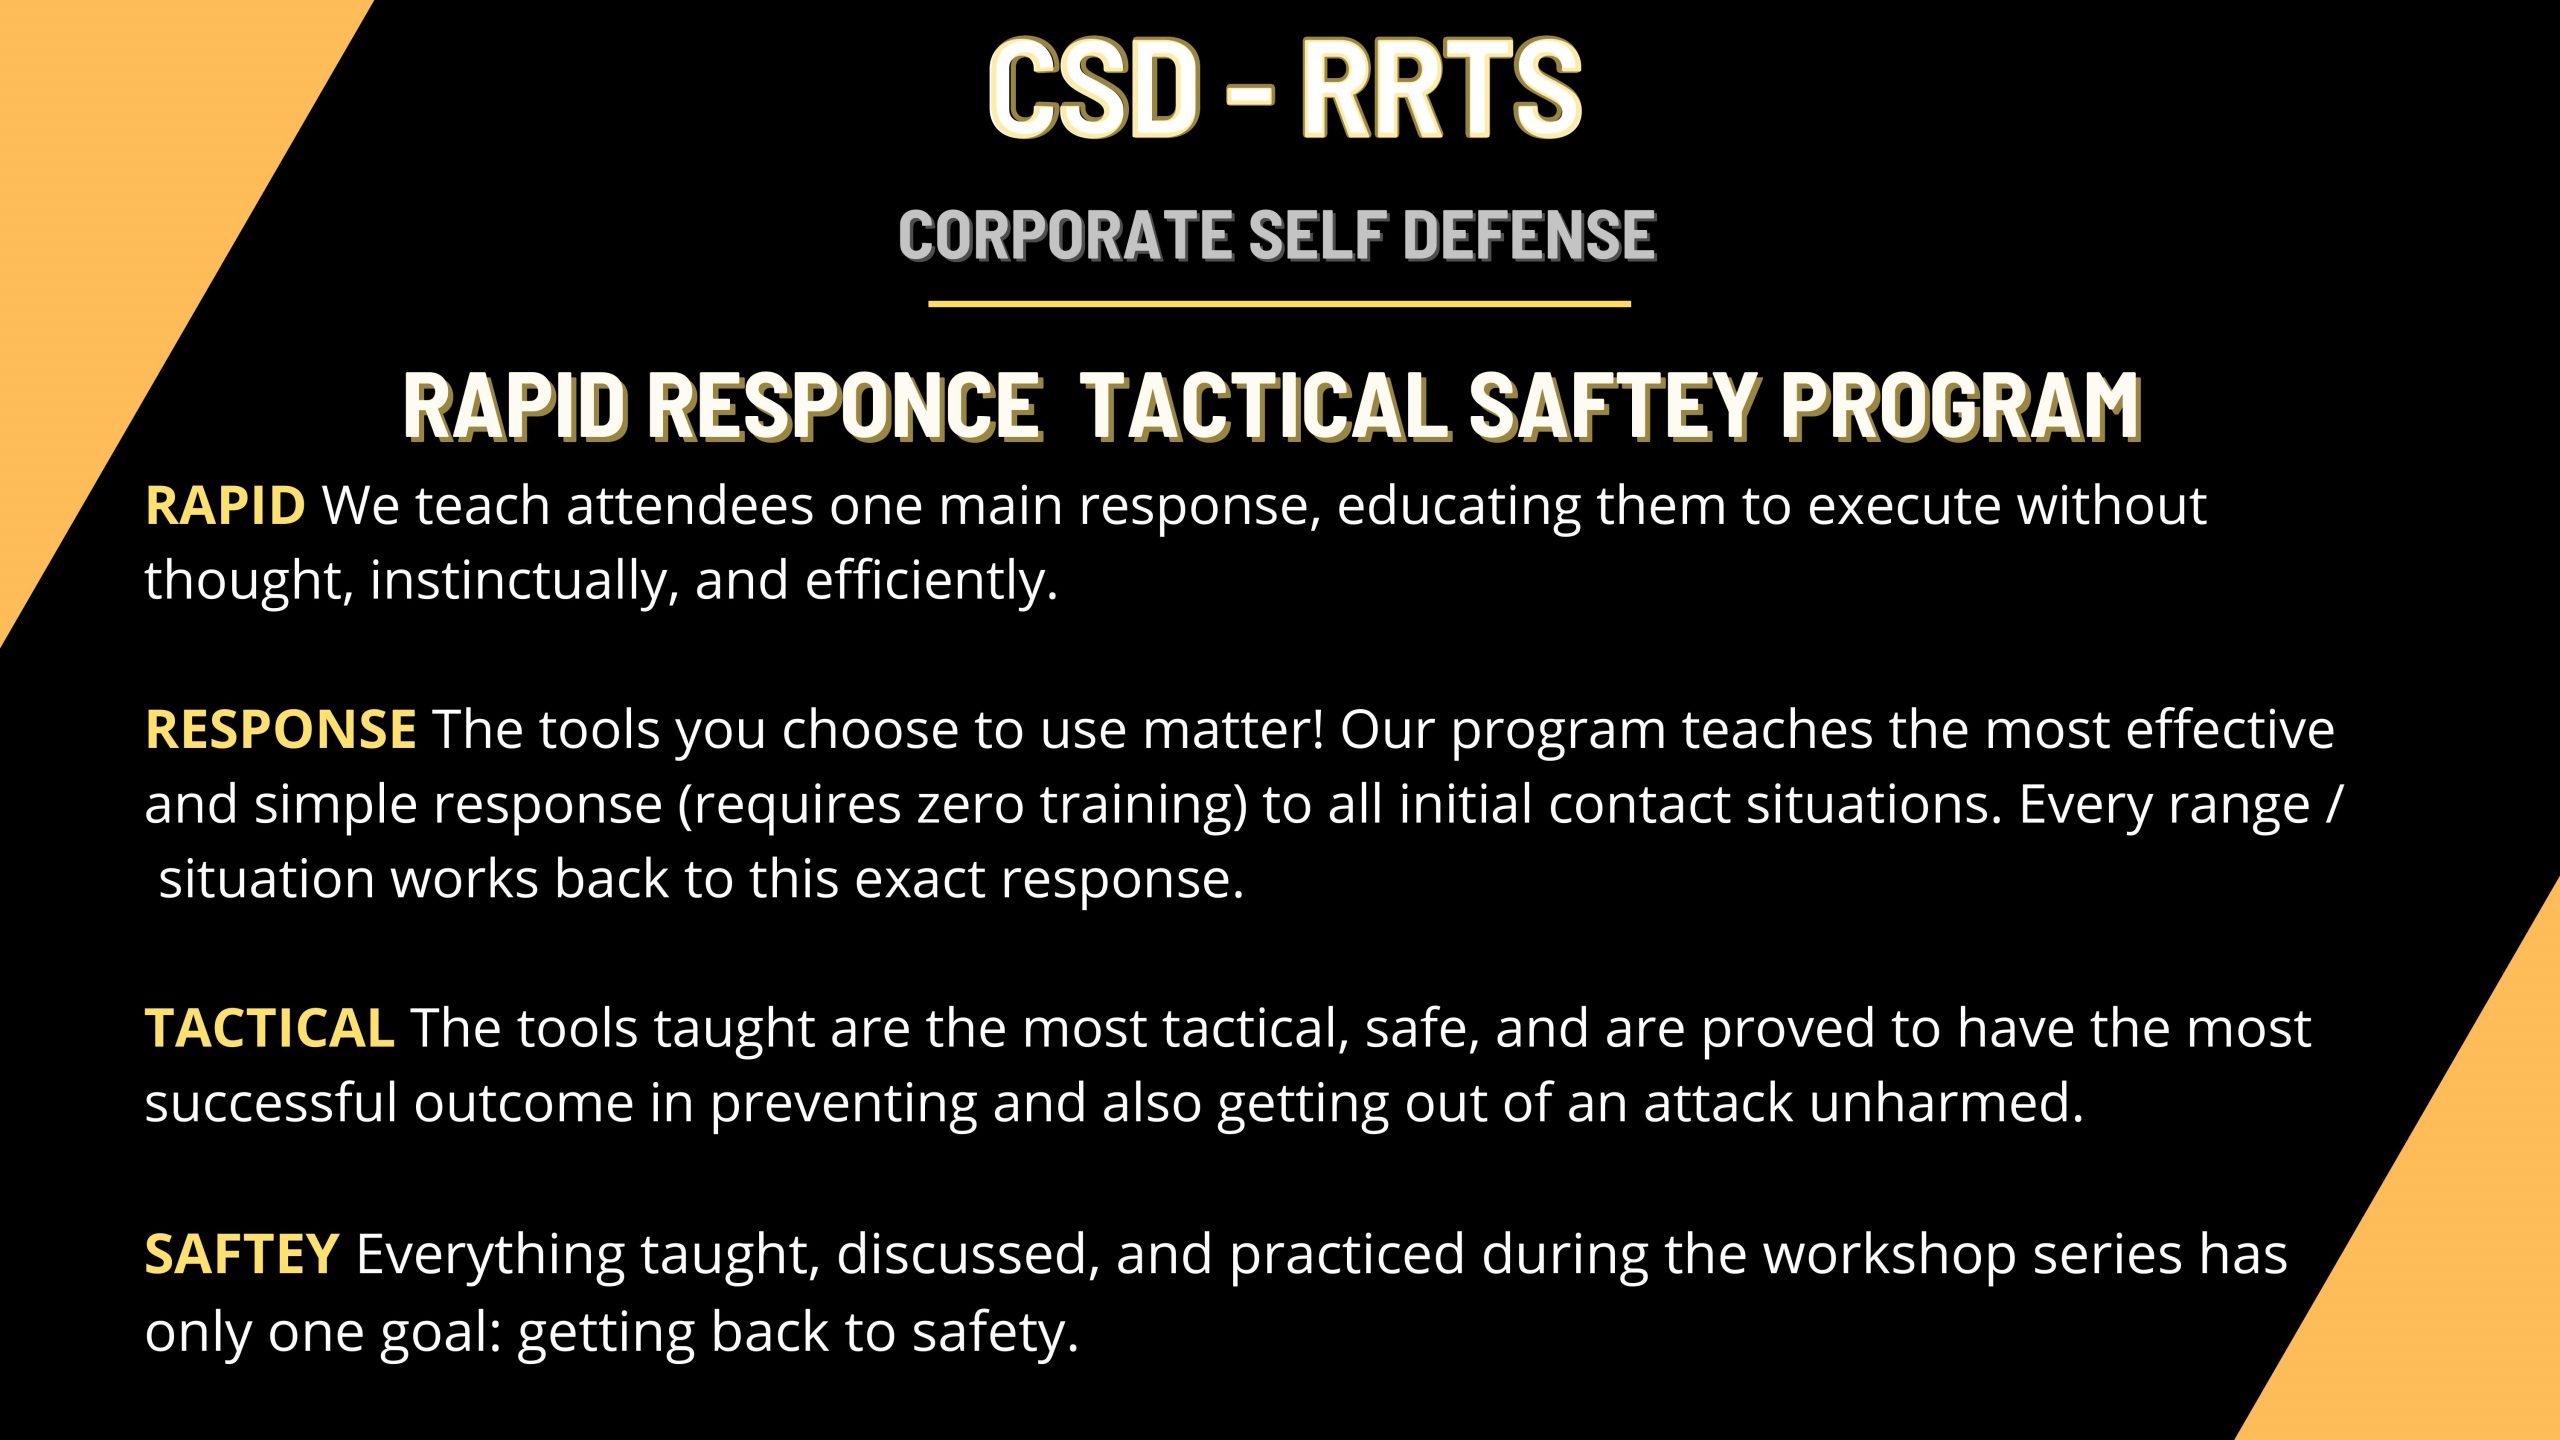 Corporate Self Defense - Rapid Response tactical safety program